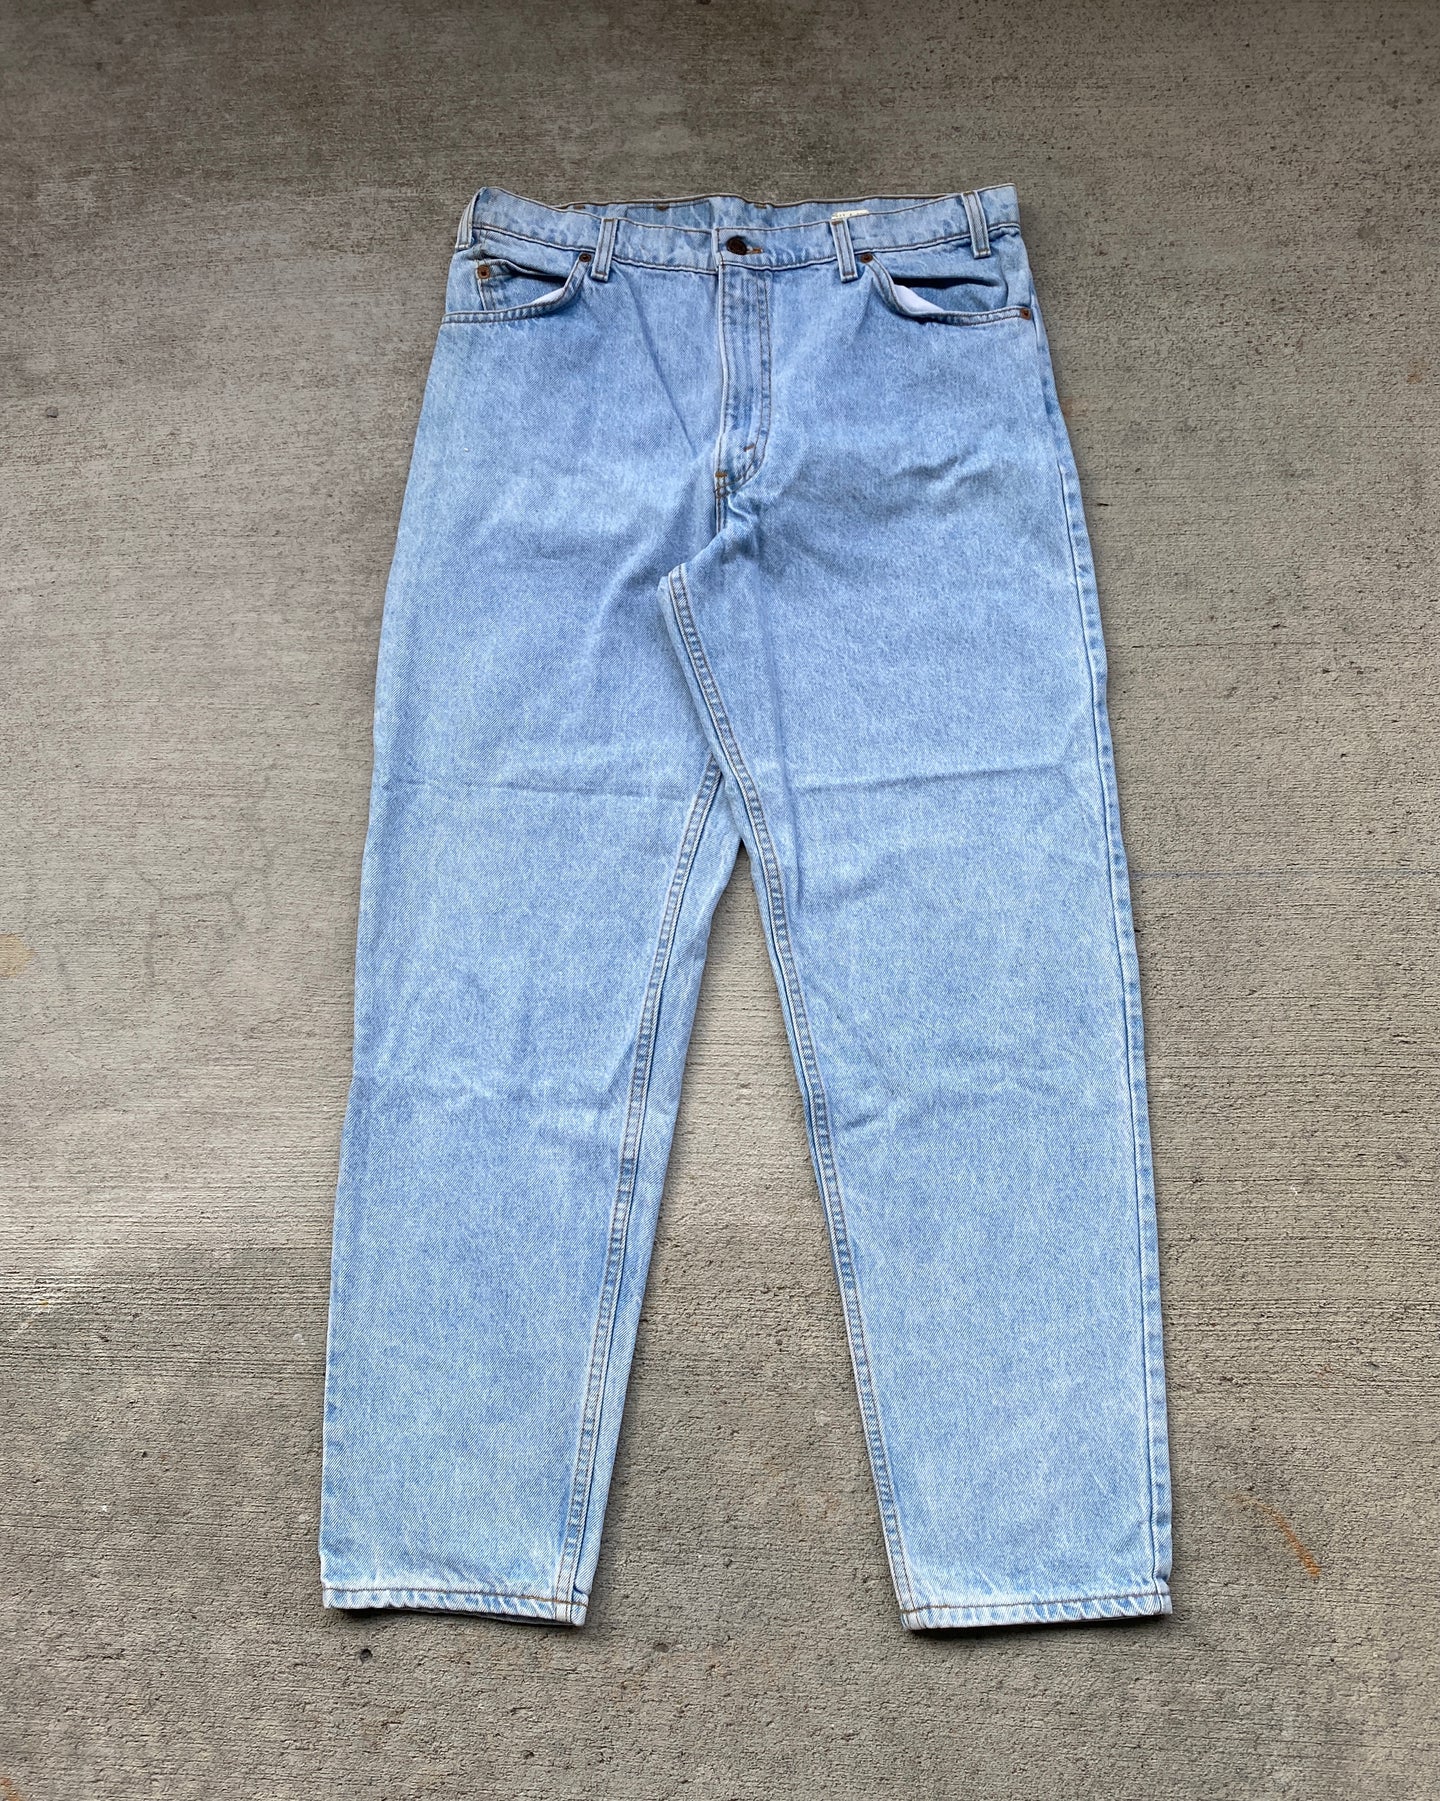 1990s Levi's 550 Orange Tab Jeans - Size 34 x 31